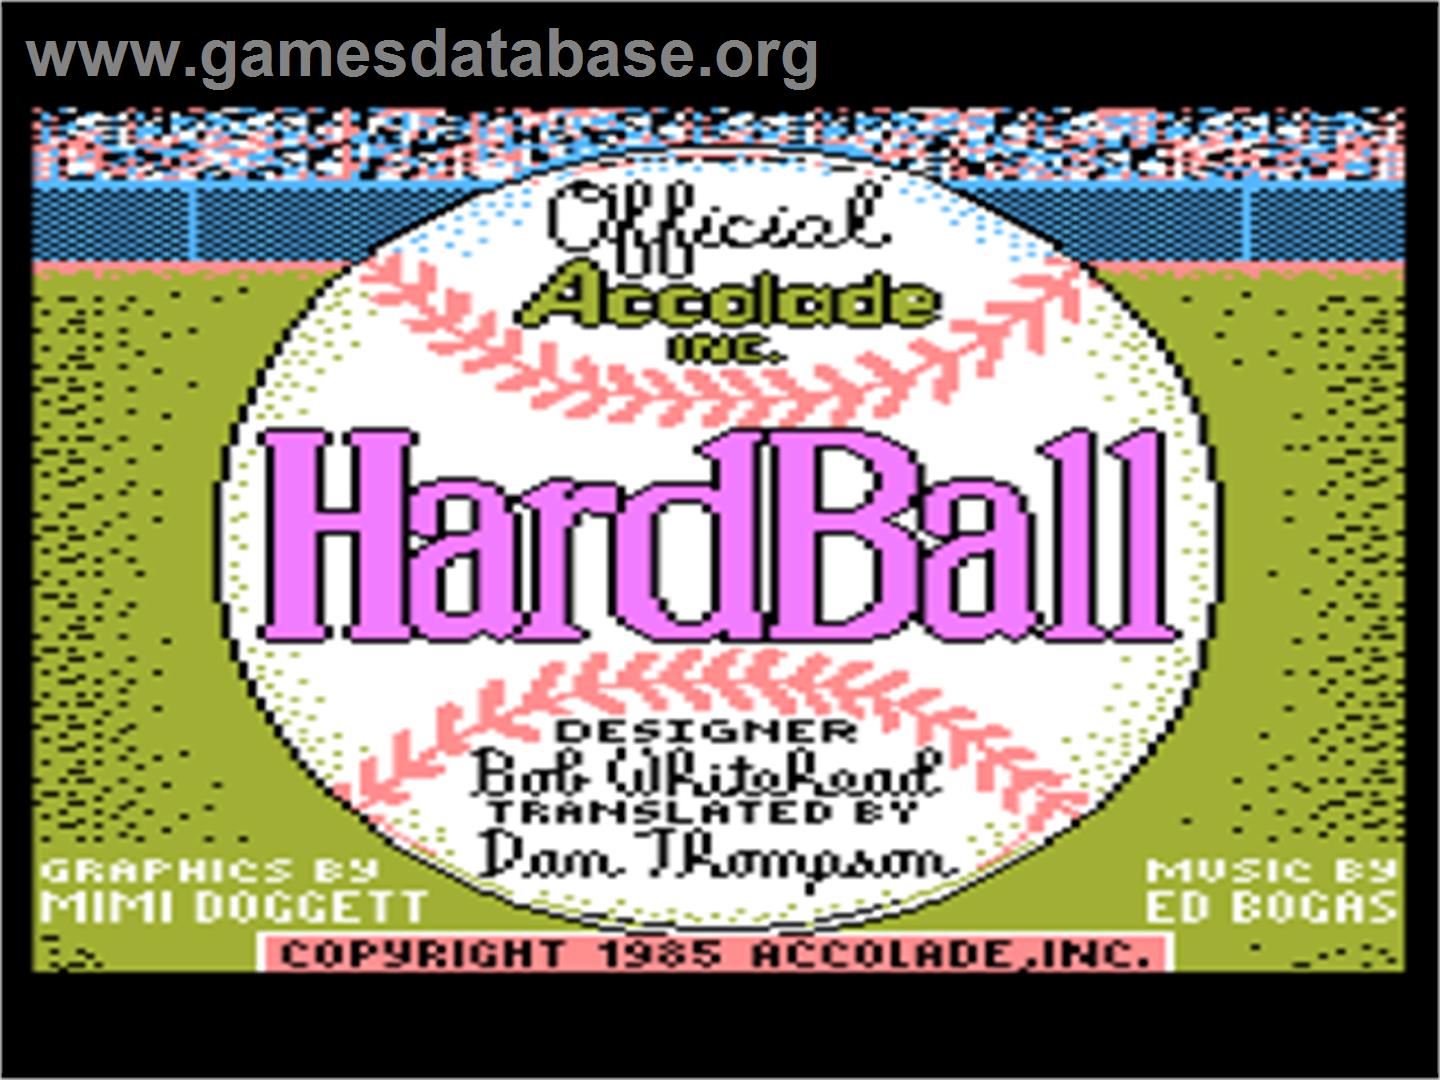 HardBall - Atari 8-bit - Artwork - Title Screen